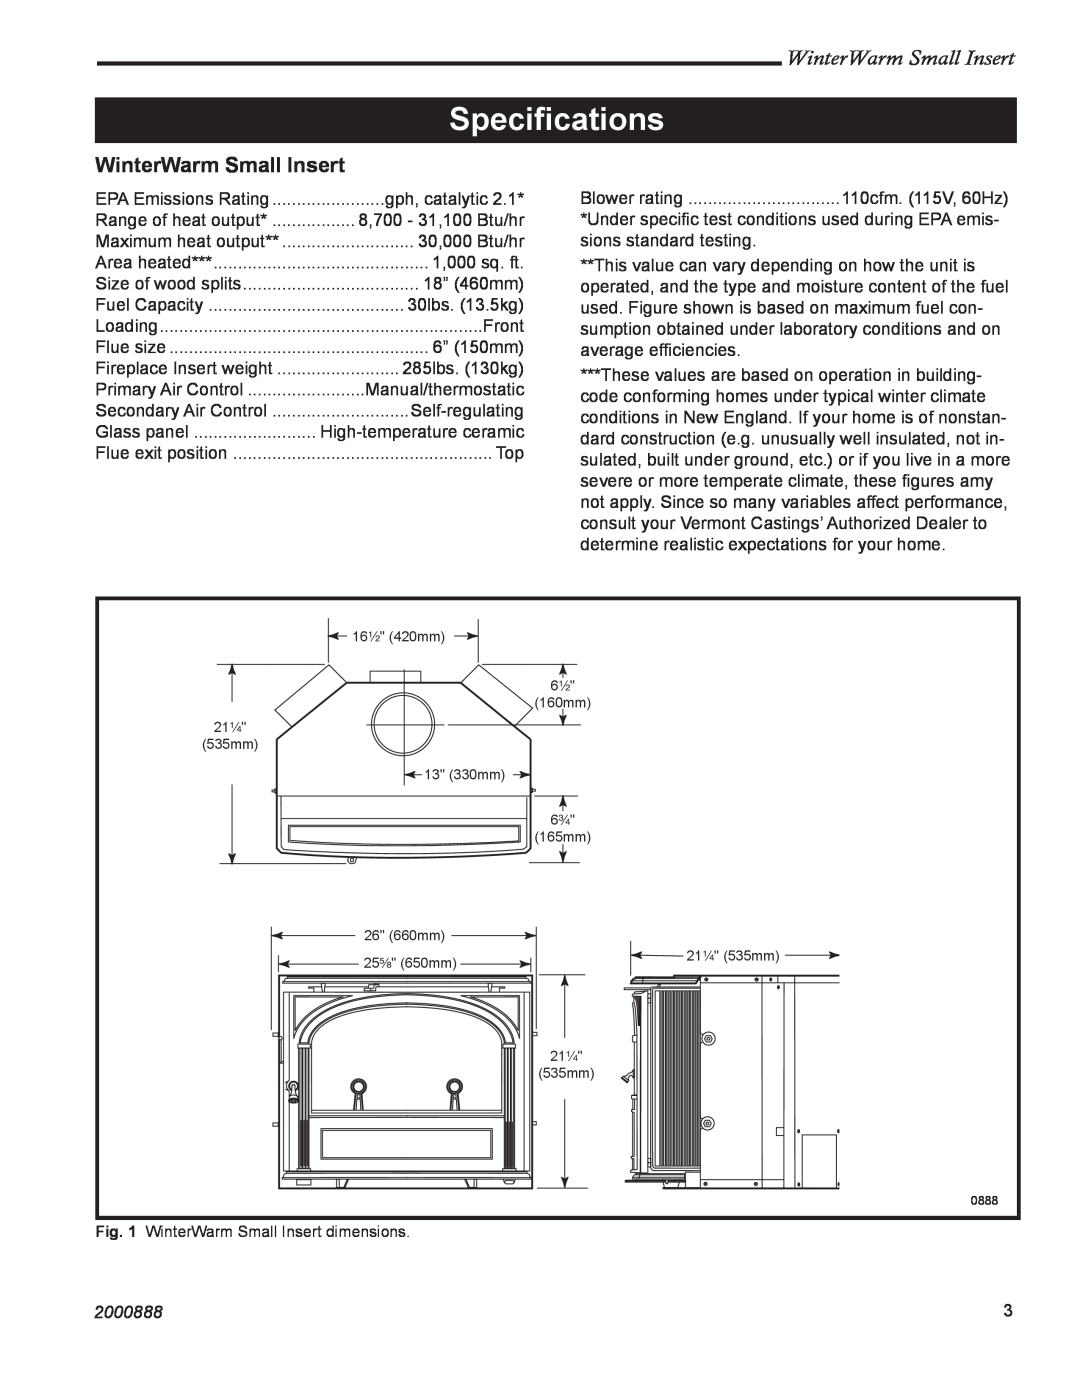 Vermont Casting 2080 installation instructions Speciﬁcations, WinterWarm Small Insert, 2000888 